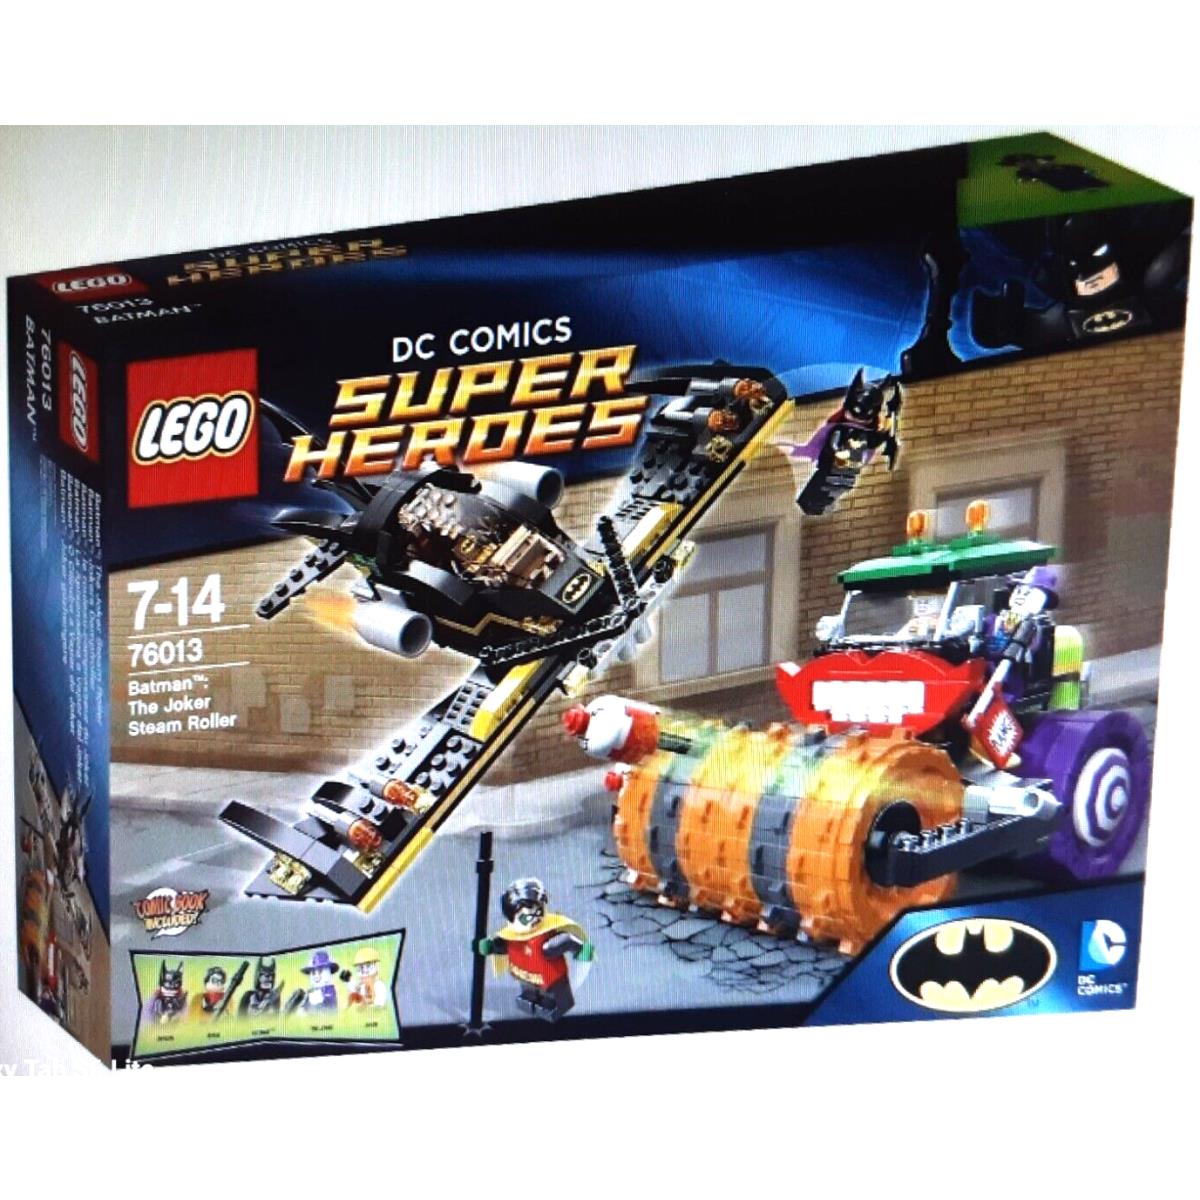 Lego 76013 DC Comics Super Heroes Batman The Joker Steam Roller